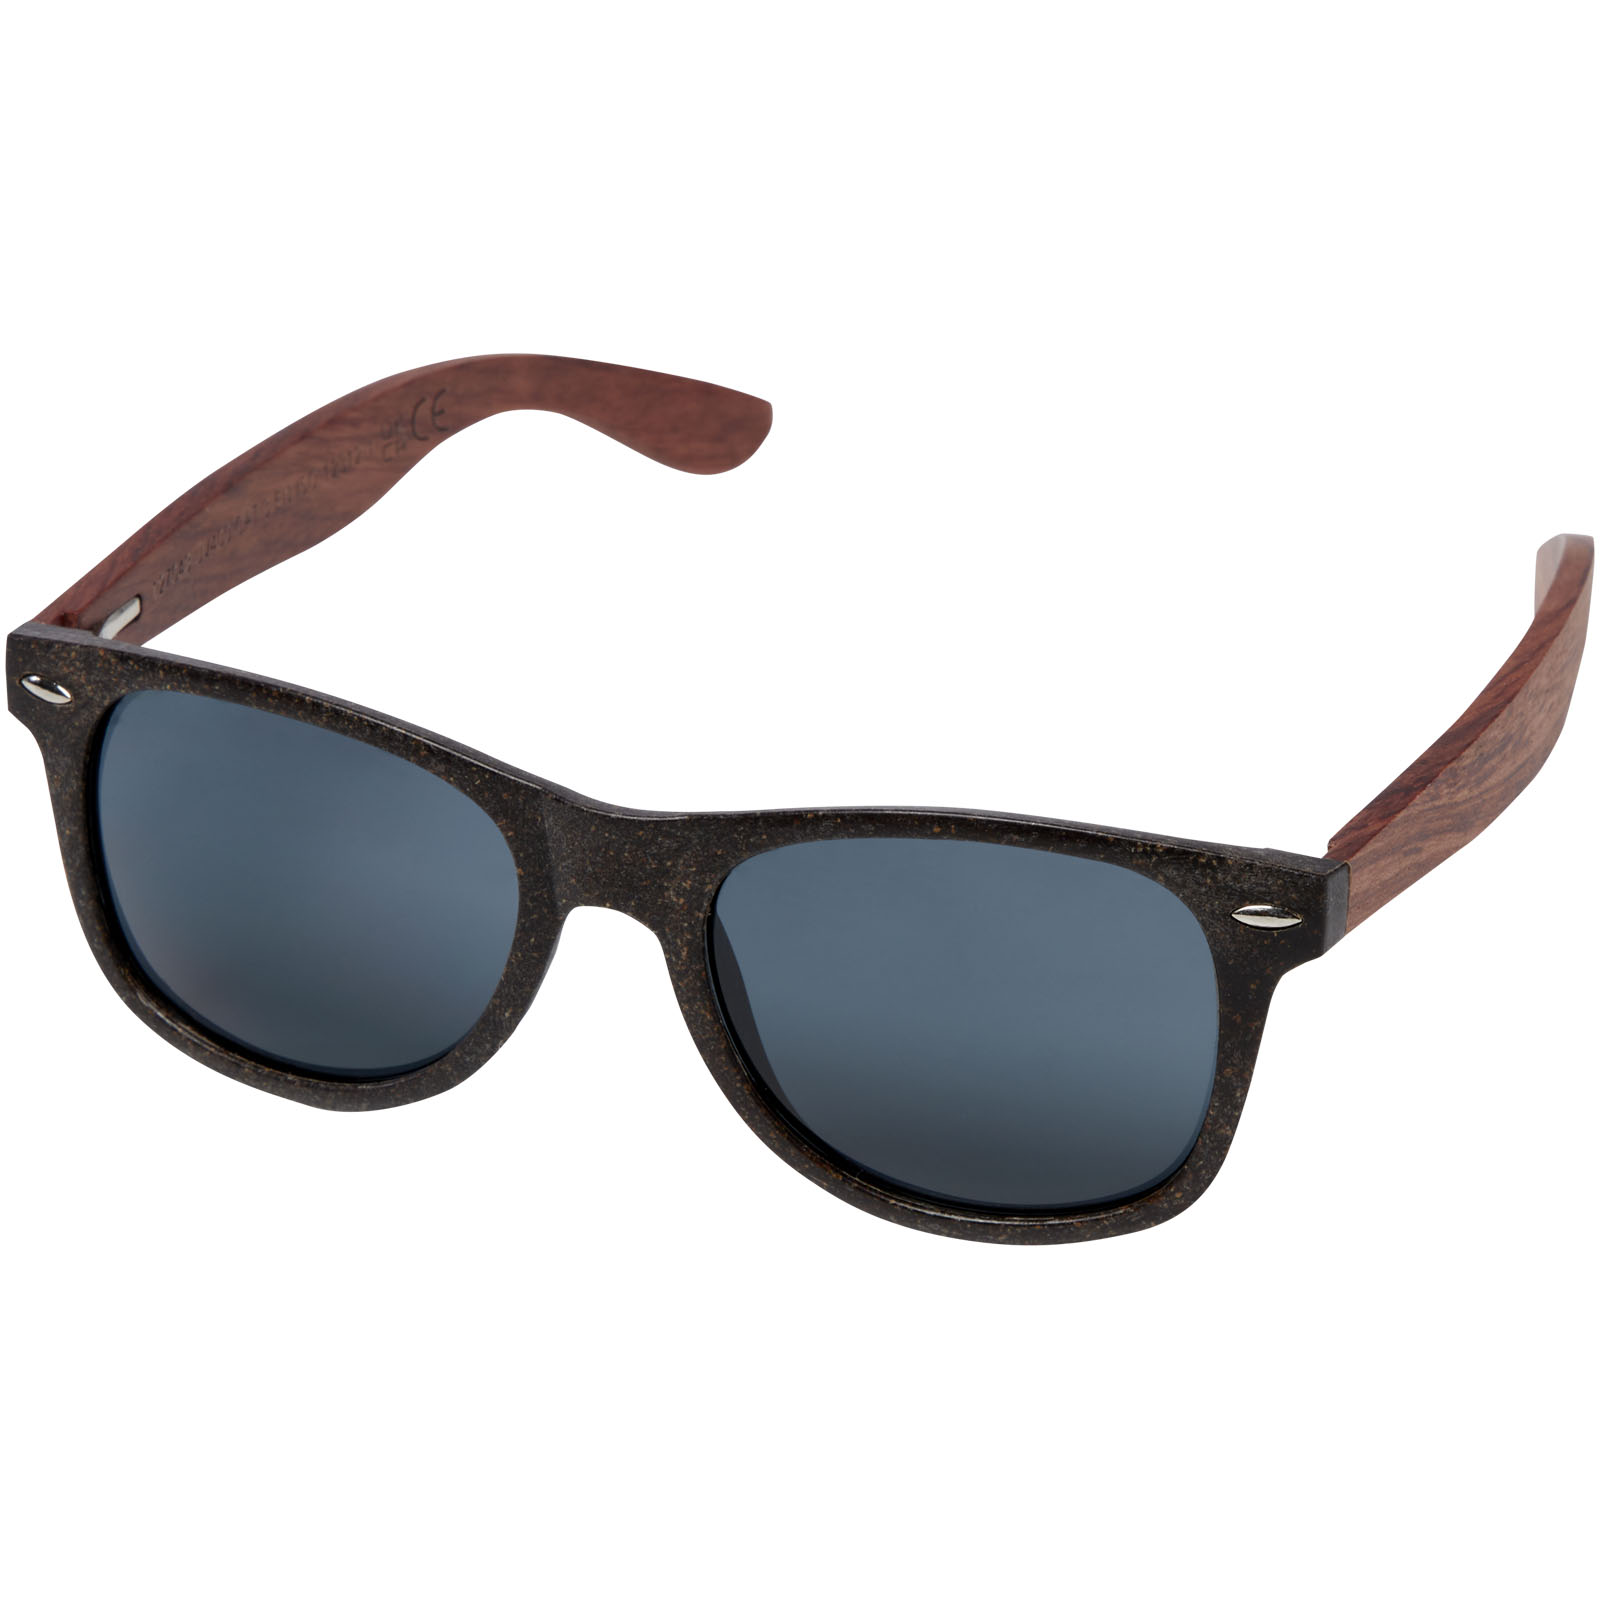 Advertising Sunglasses - Kafo sunglasses